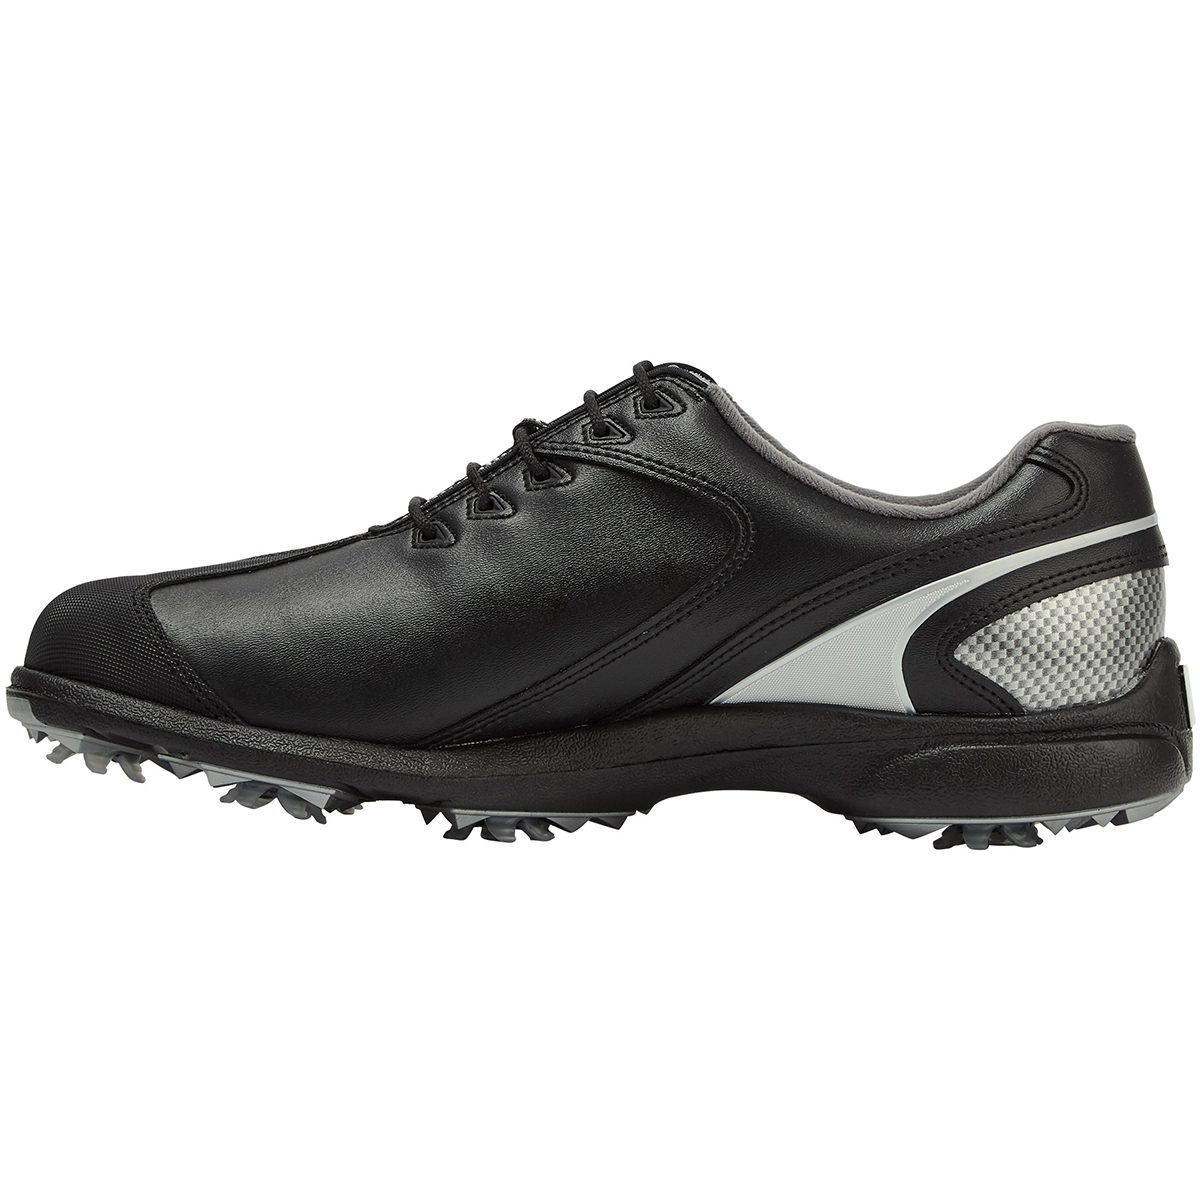 FootJoy Men's Sport LT Waterproof Spiked Golf Shoes from american golf